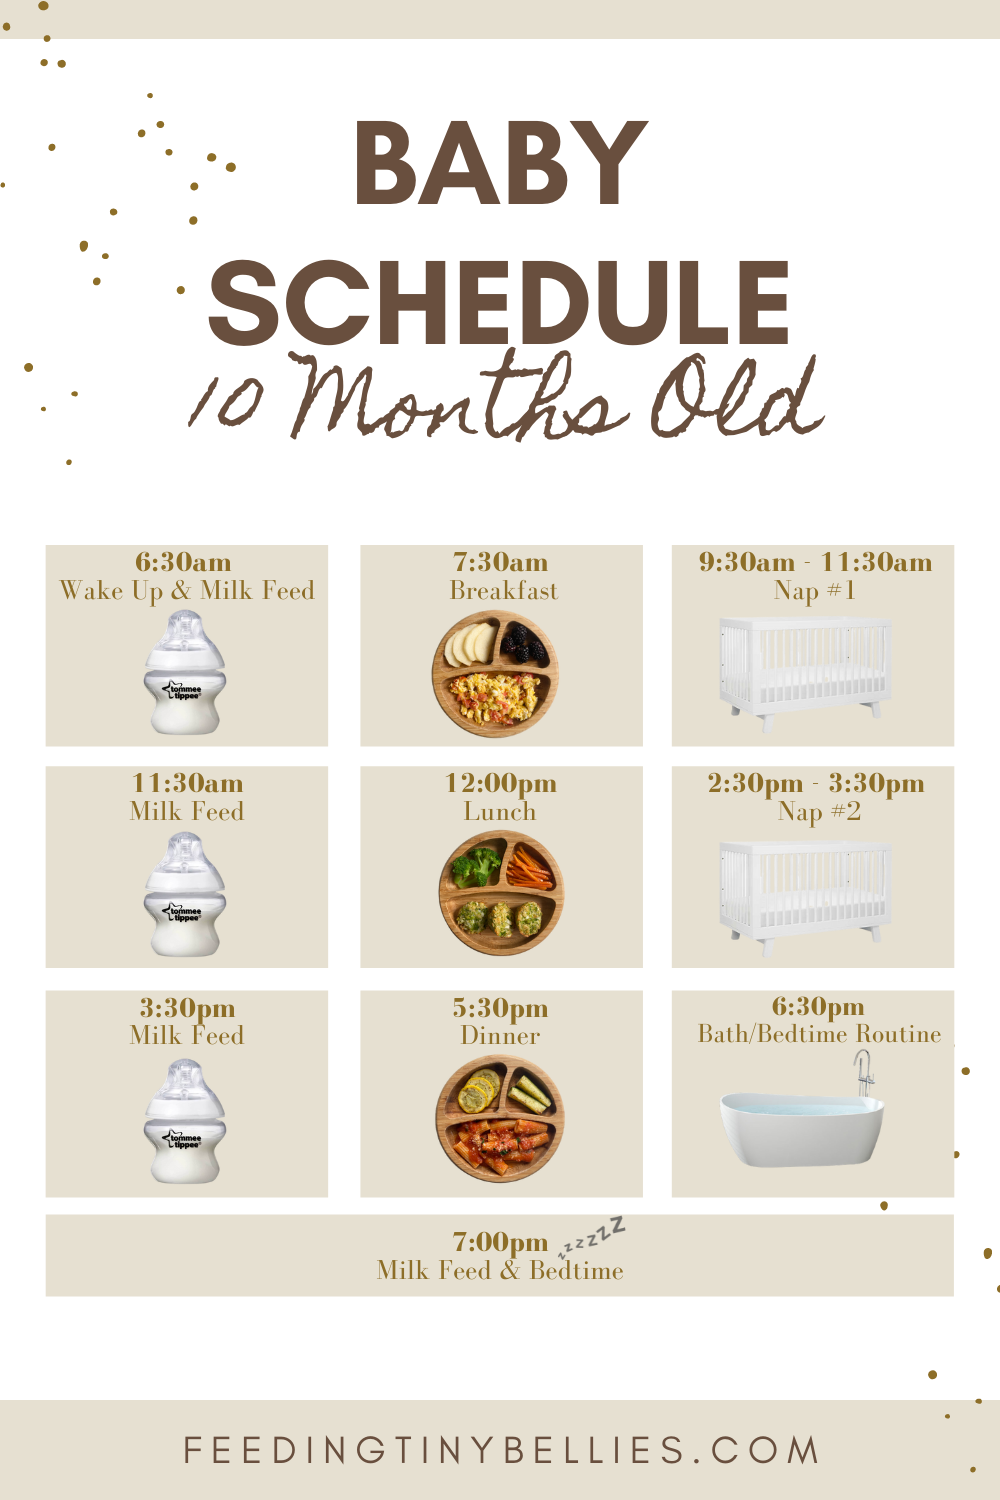 Baby schedule 10 months old